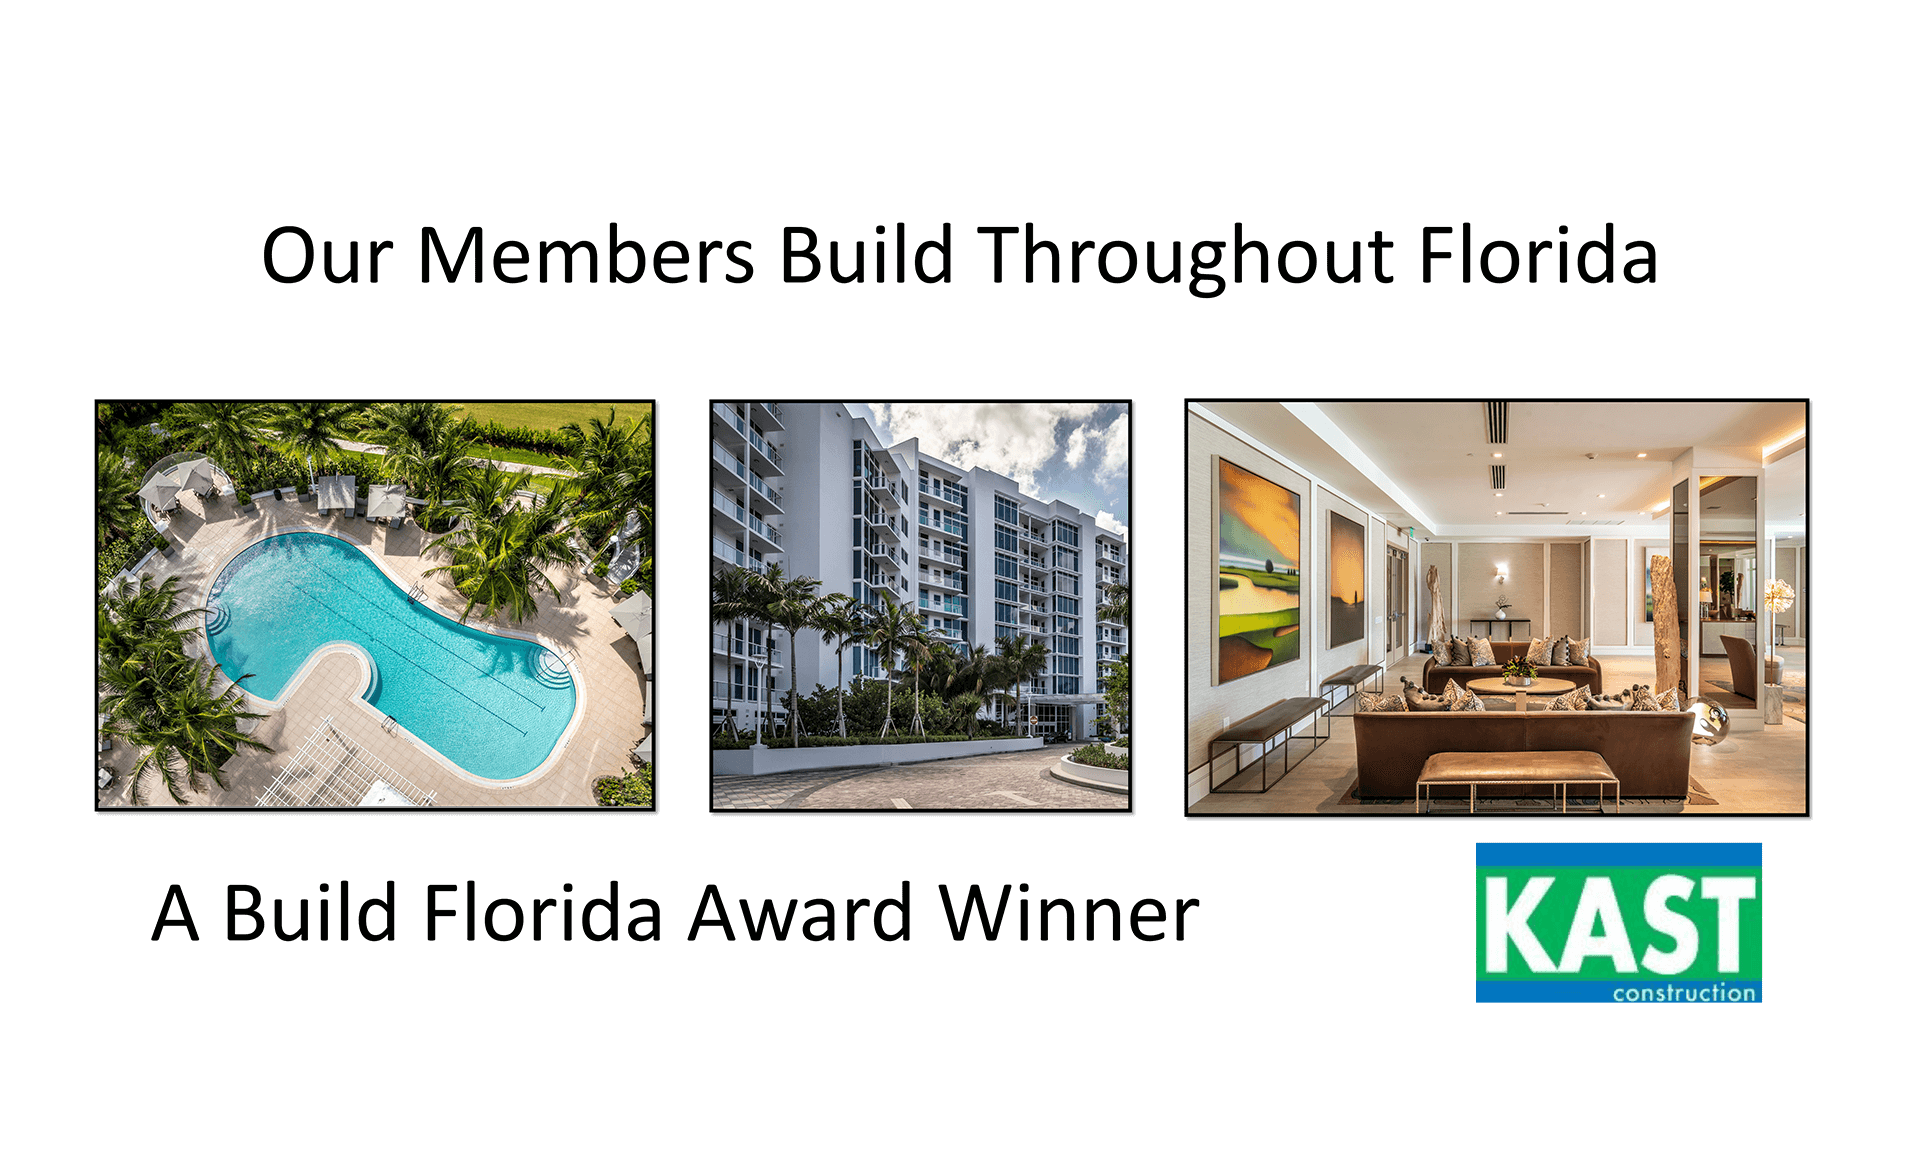 A Build Florida Award Winner kast